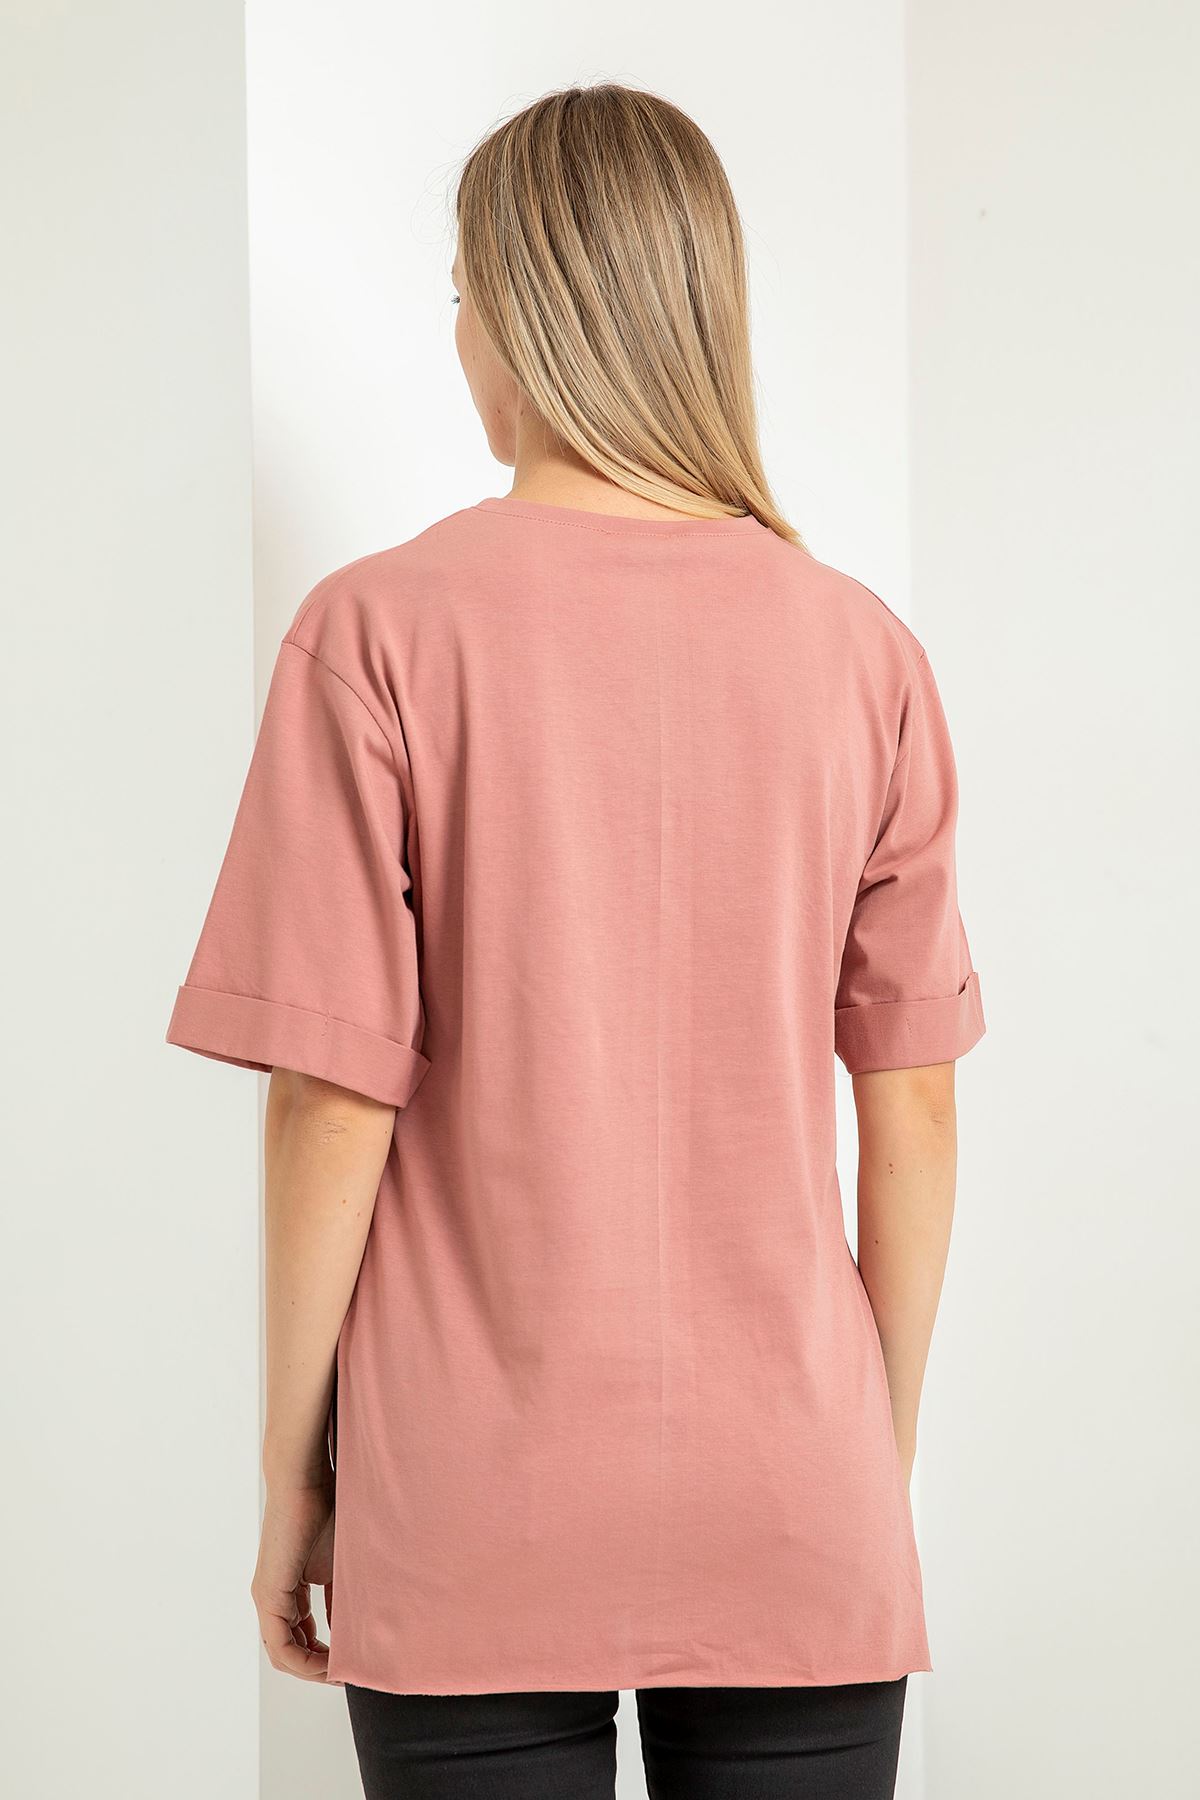 Short Sleeve Bicycle Collar Below Hip Comfy Female Silhouetteженская футболка - Rose 